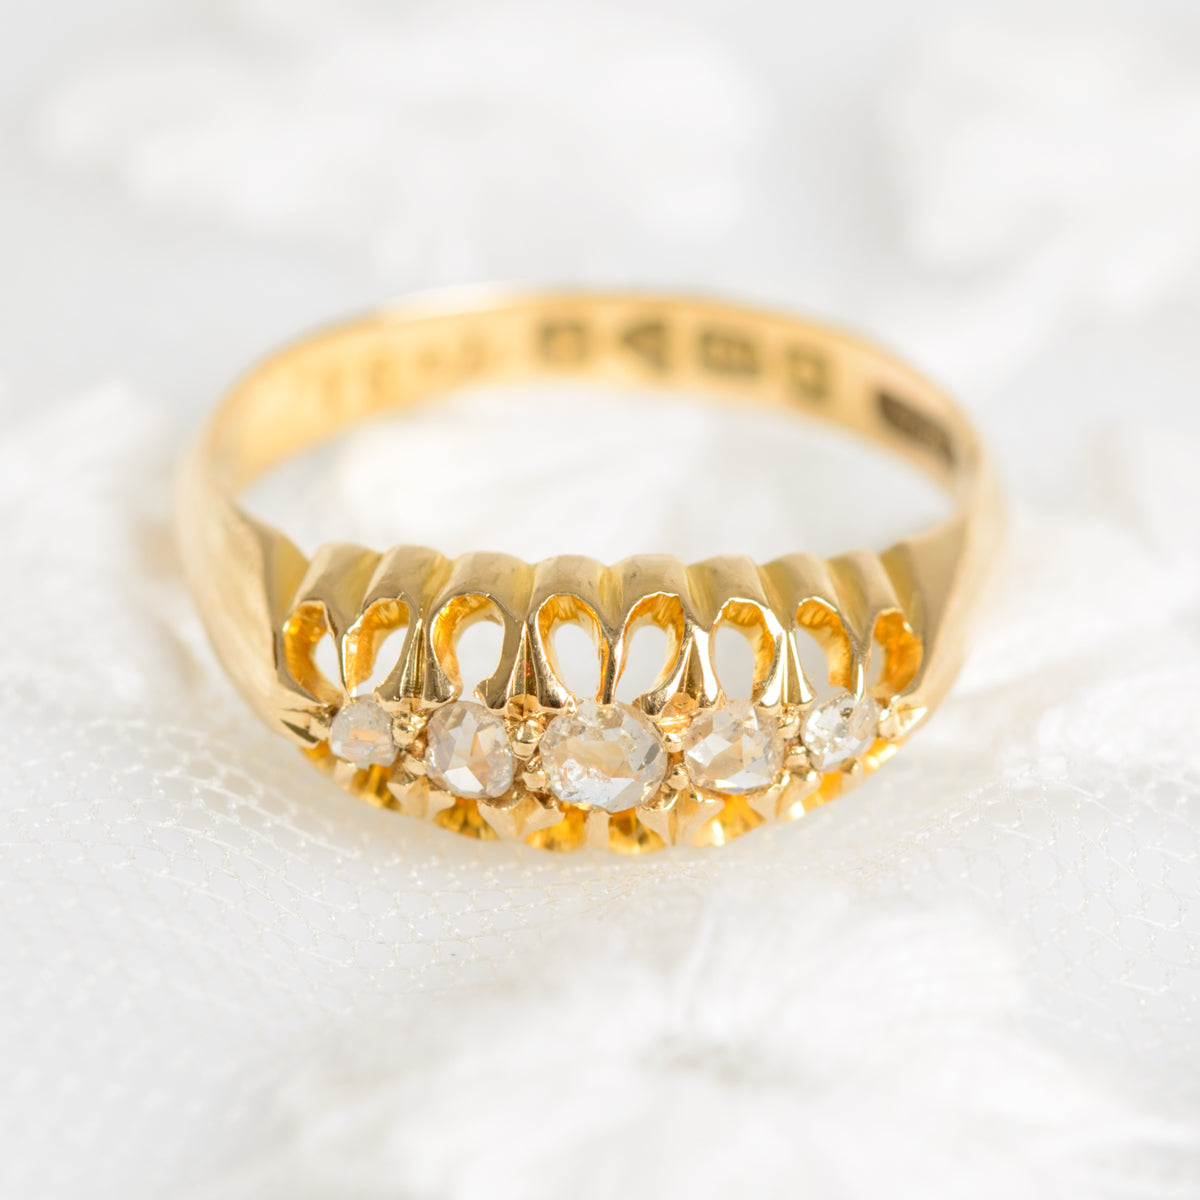 Antique Edwardian 18k Gold & Diamond Ladies Ring Chester 18ct Hallmark 1907  (A1304)